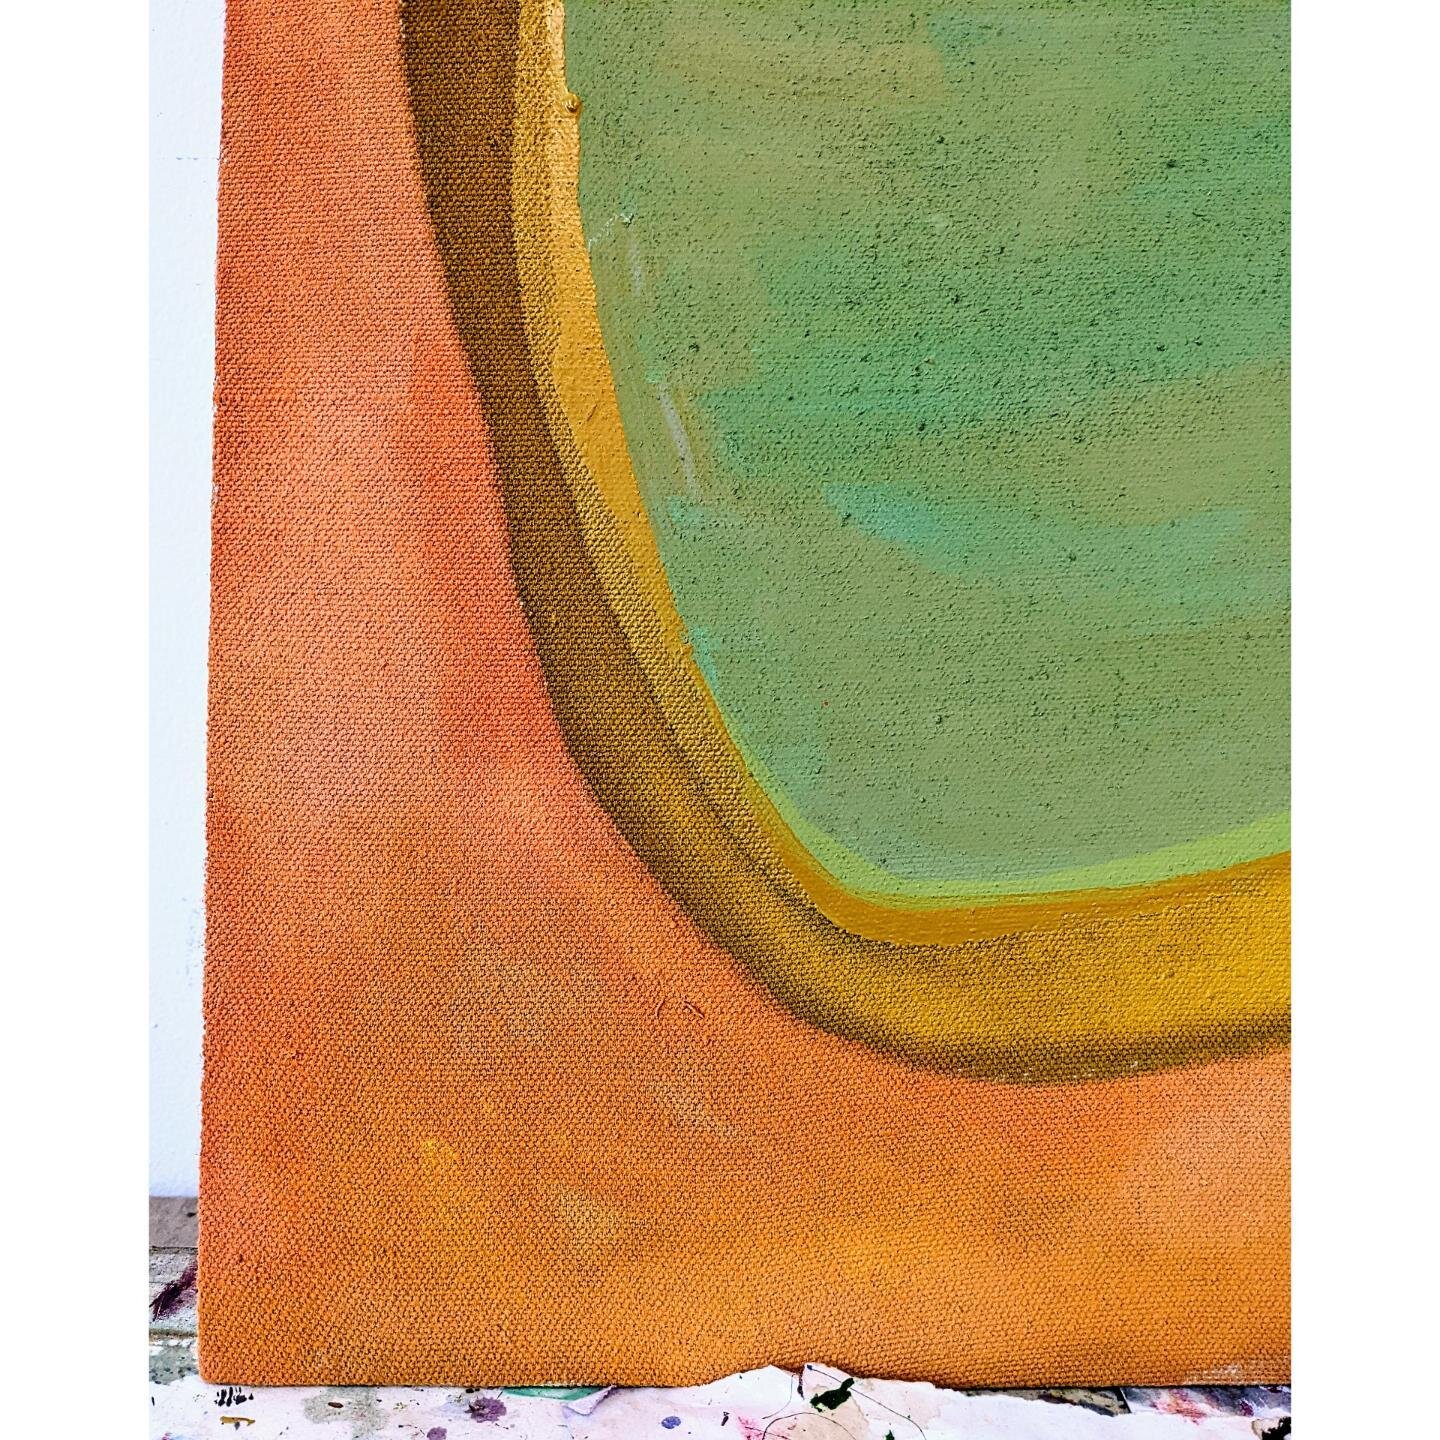 In the studio today. 

#painter #seattleartist #contemporaryart #circlesaregood #art #artist #color #colorful #acrylic #design #dscolor #dsart #create #creative #elizabethanderson #cylcollective #womenwhopaint #seattleartpost #wip